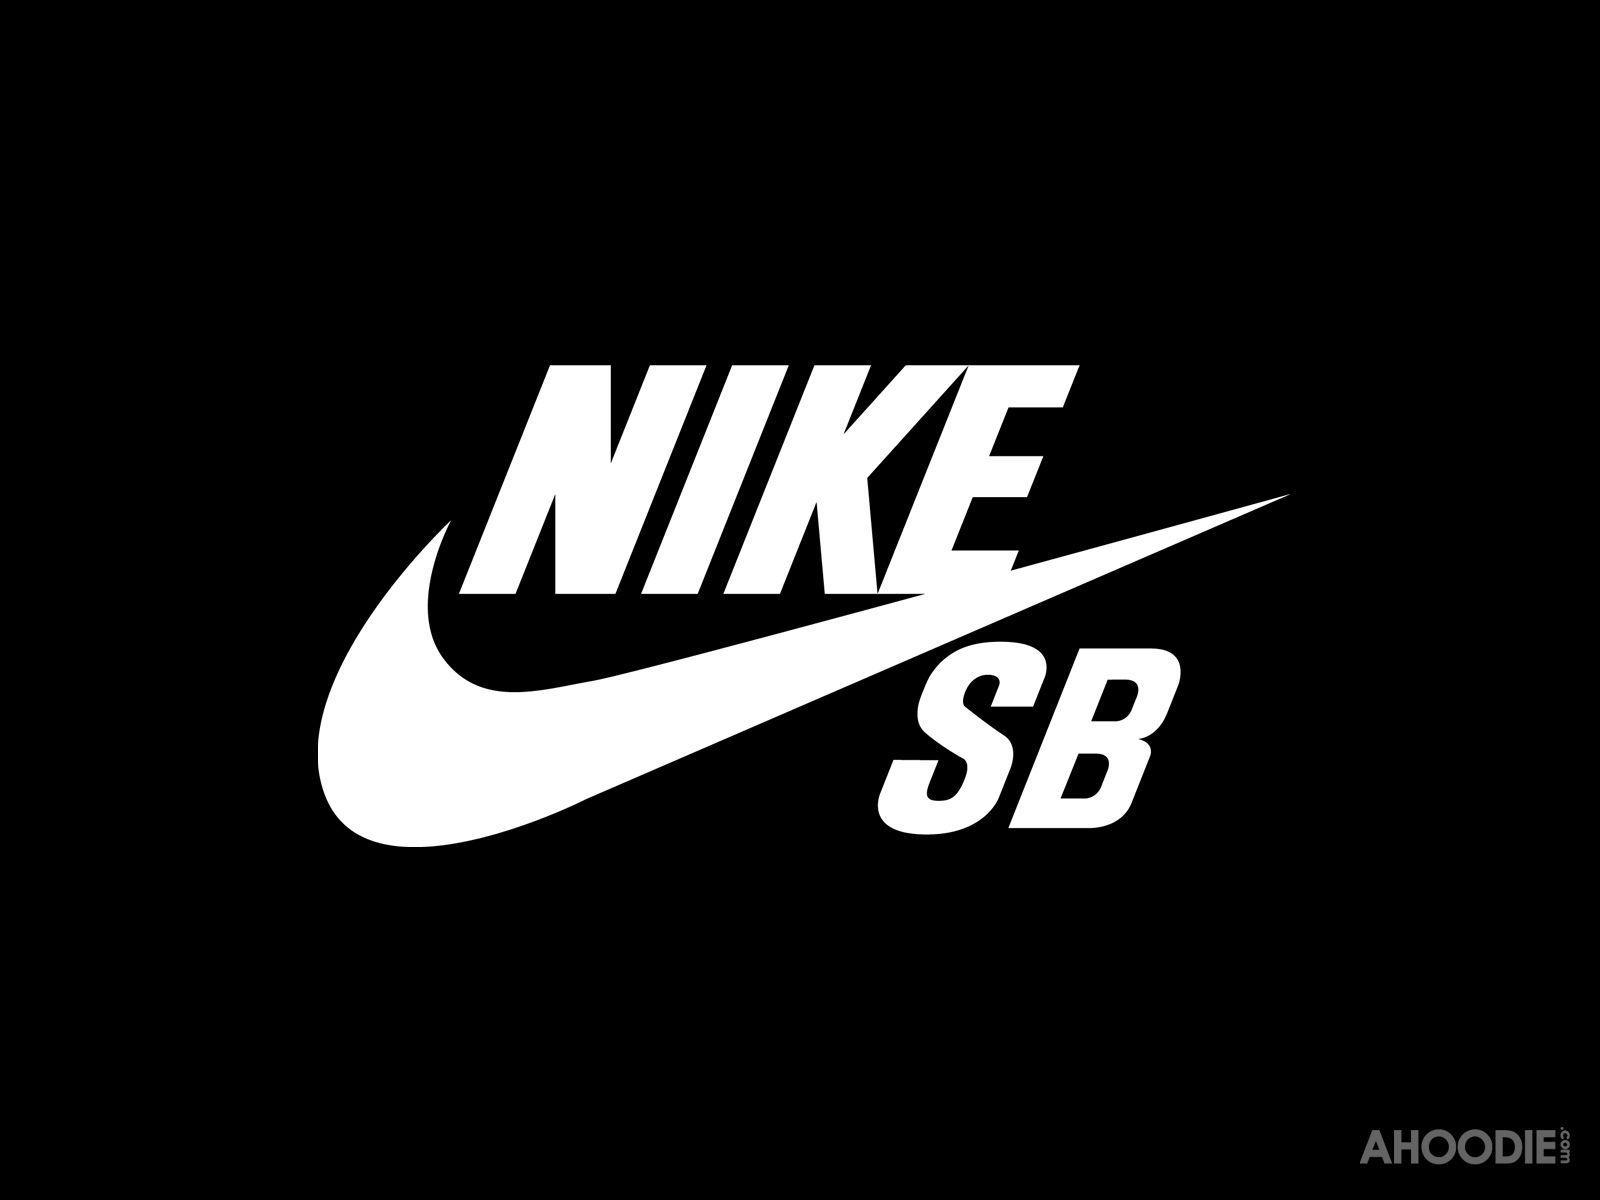 nike sb logo wallpaper - Image And Wallpaper free to